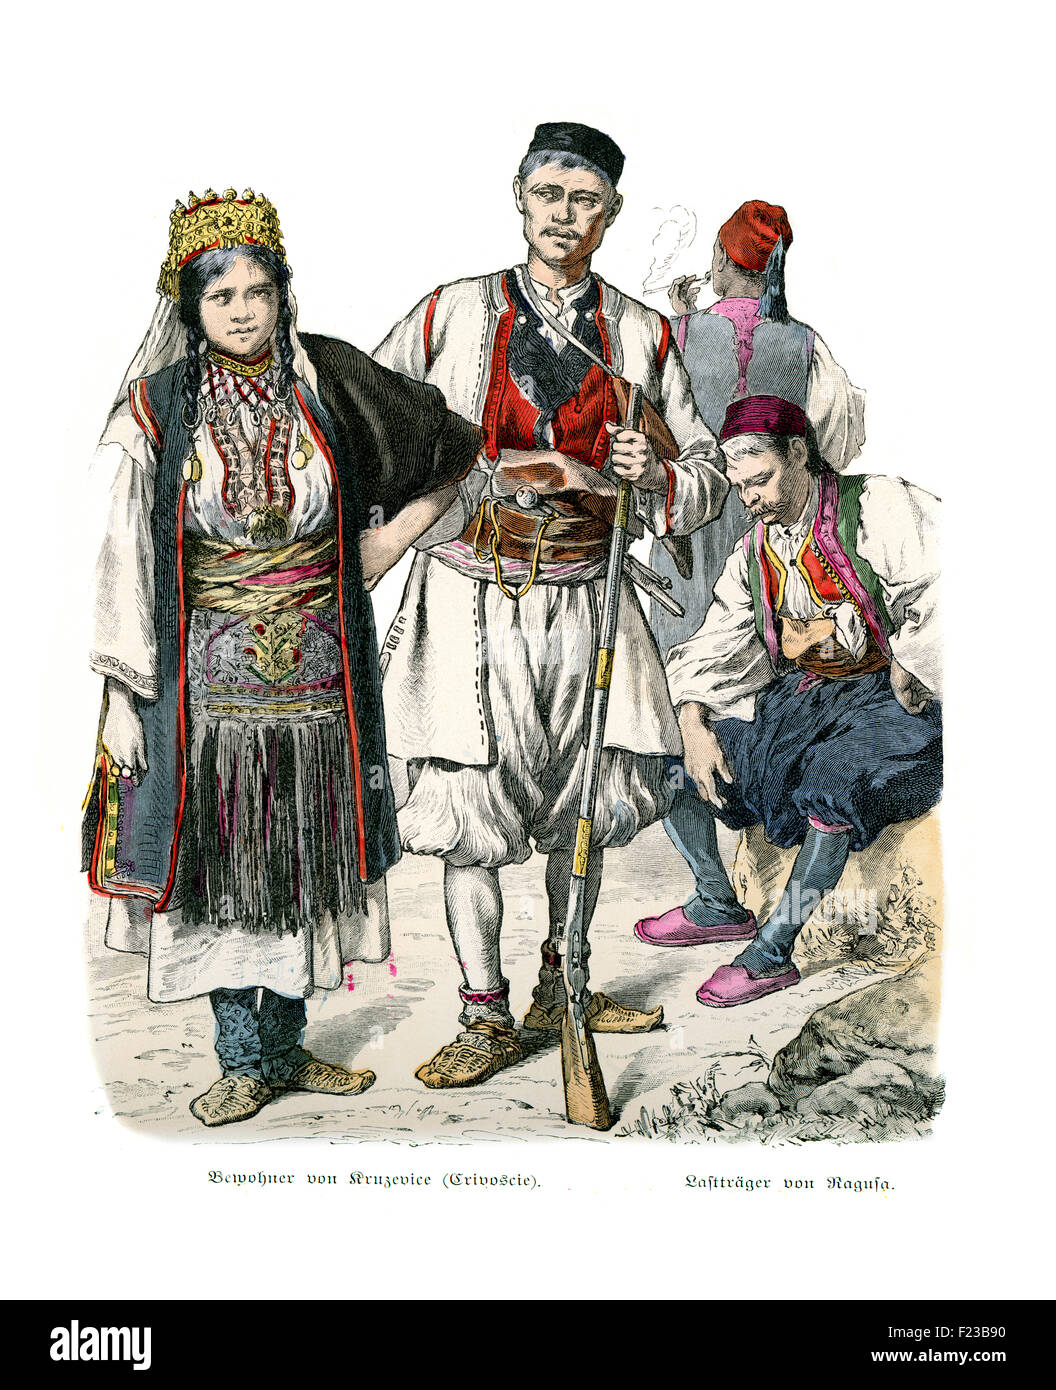 Period costumes of Dalmatia 19th Century, Inhabitants of Krozevice (Crivoscie) load carrier of Ragusa Stock Photo